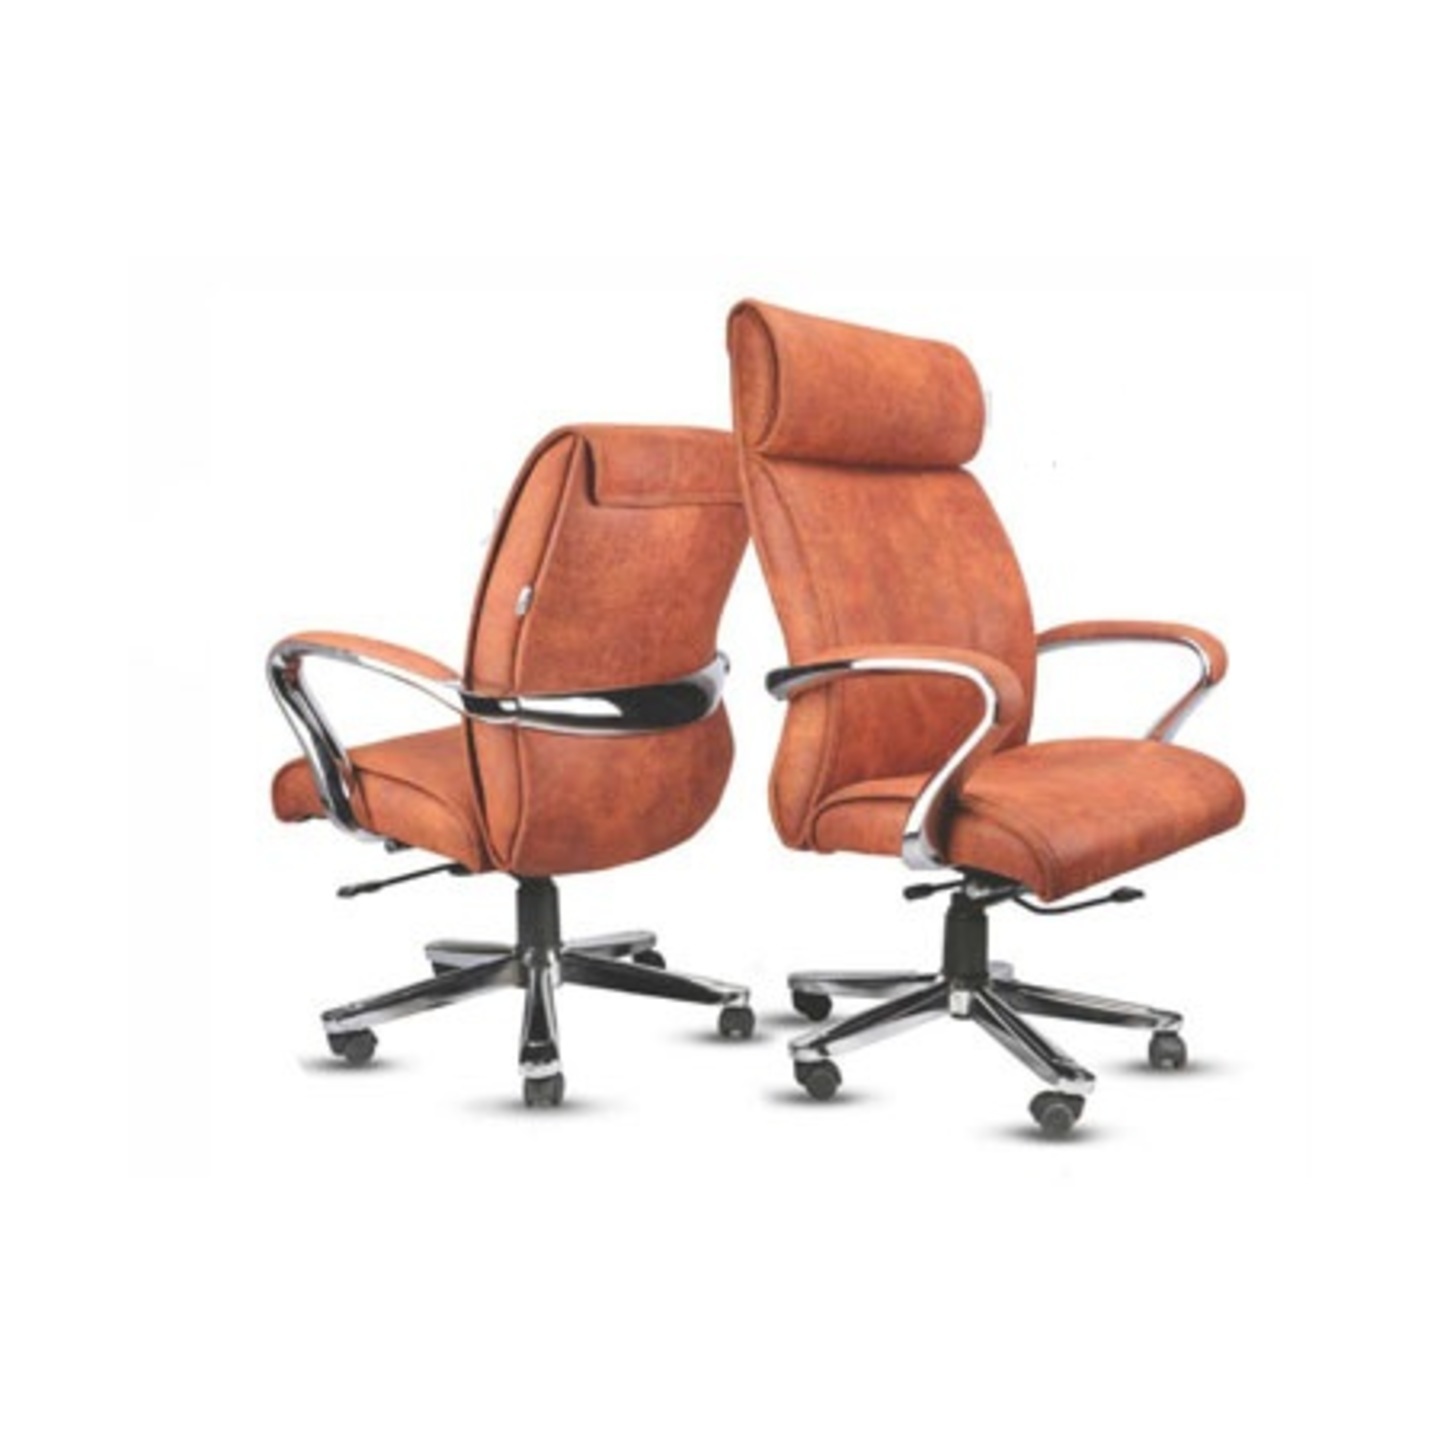 PI High Back Chair Brezza In Brown Colour